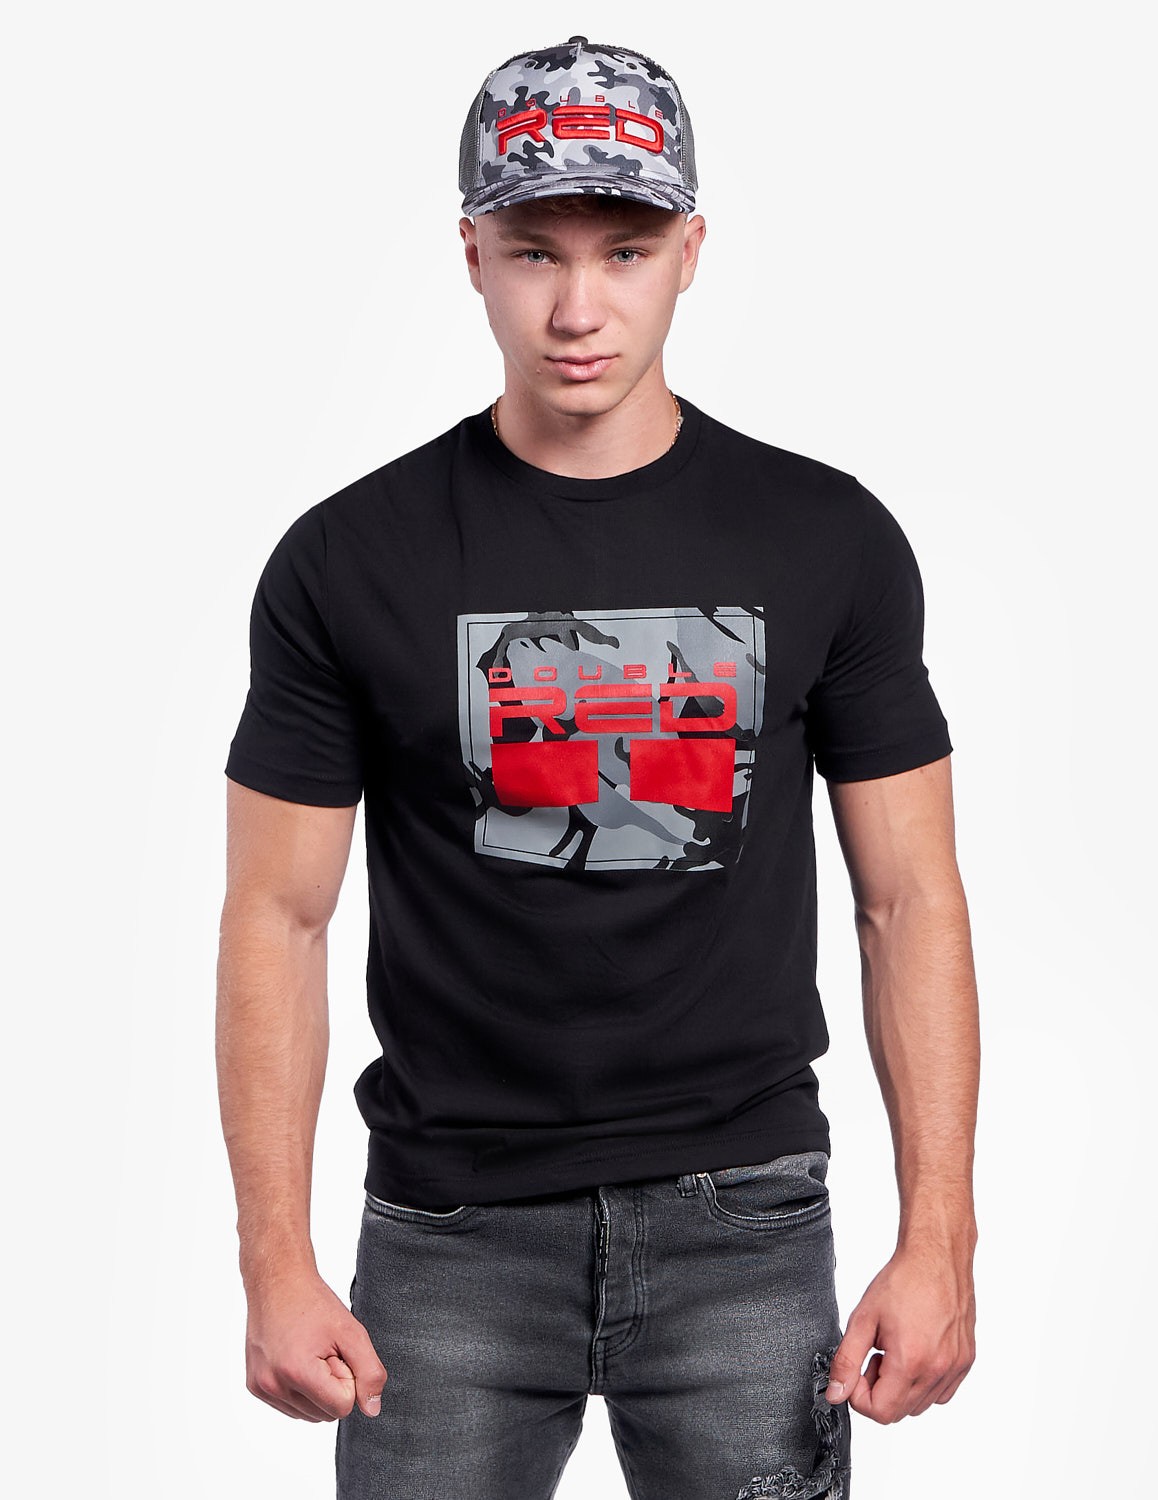 T-shirt CAMODRESSCODE™ Black/Red